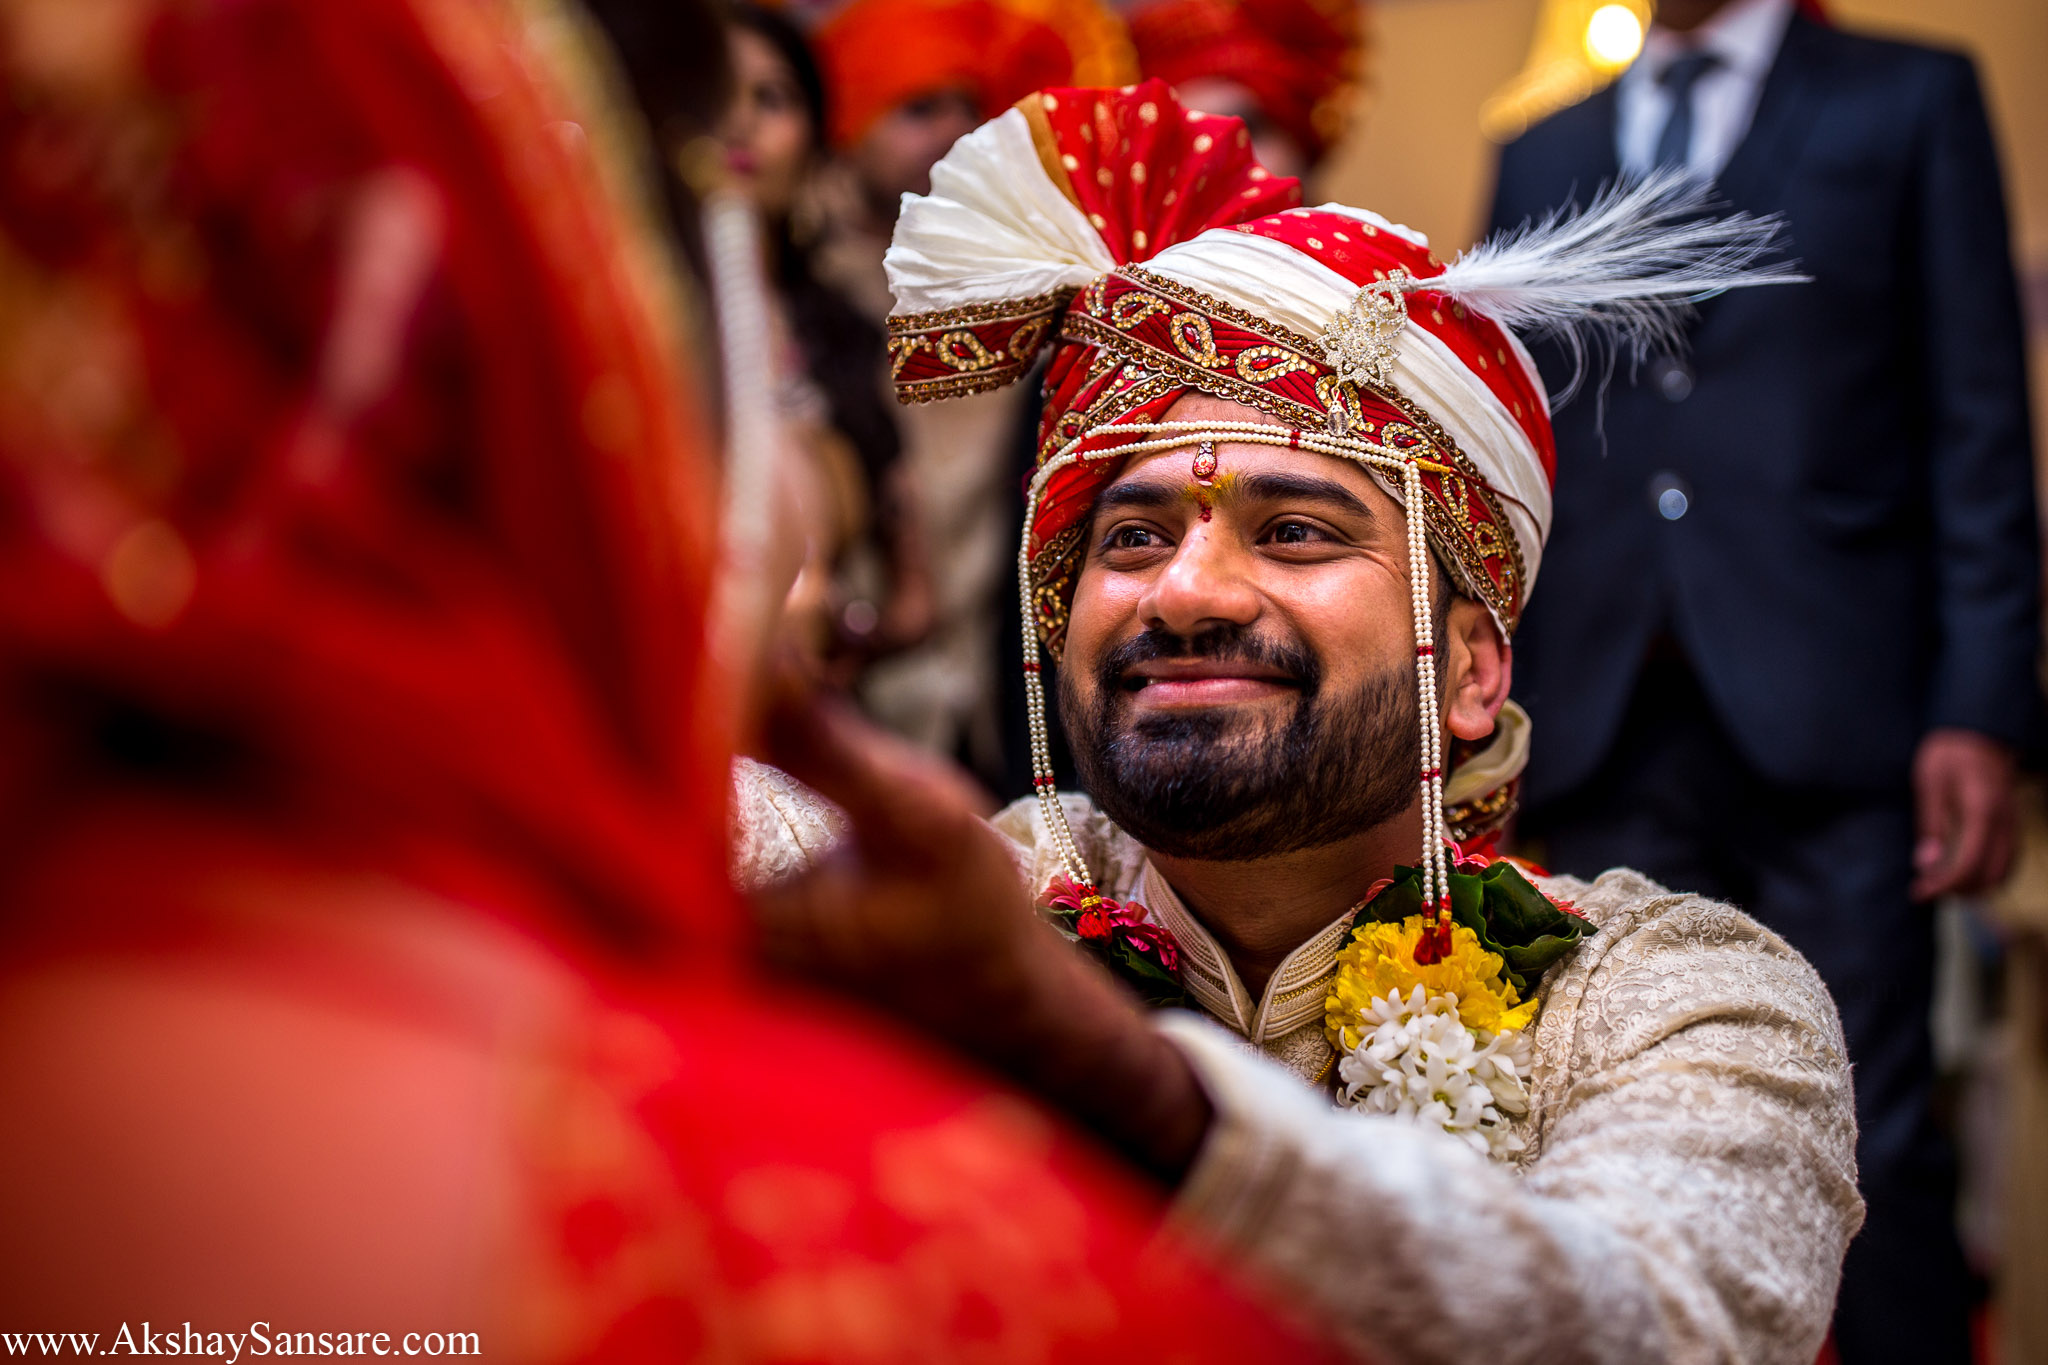 Ajay & Devika Akshay Sansare Photography Best Candid wedding photographer in mumbai india24.jpg